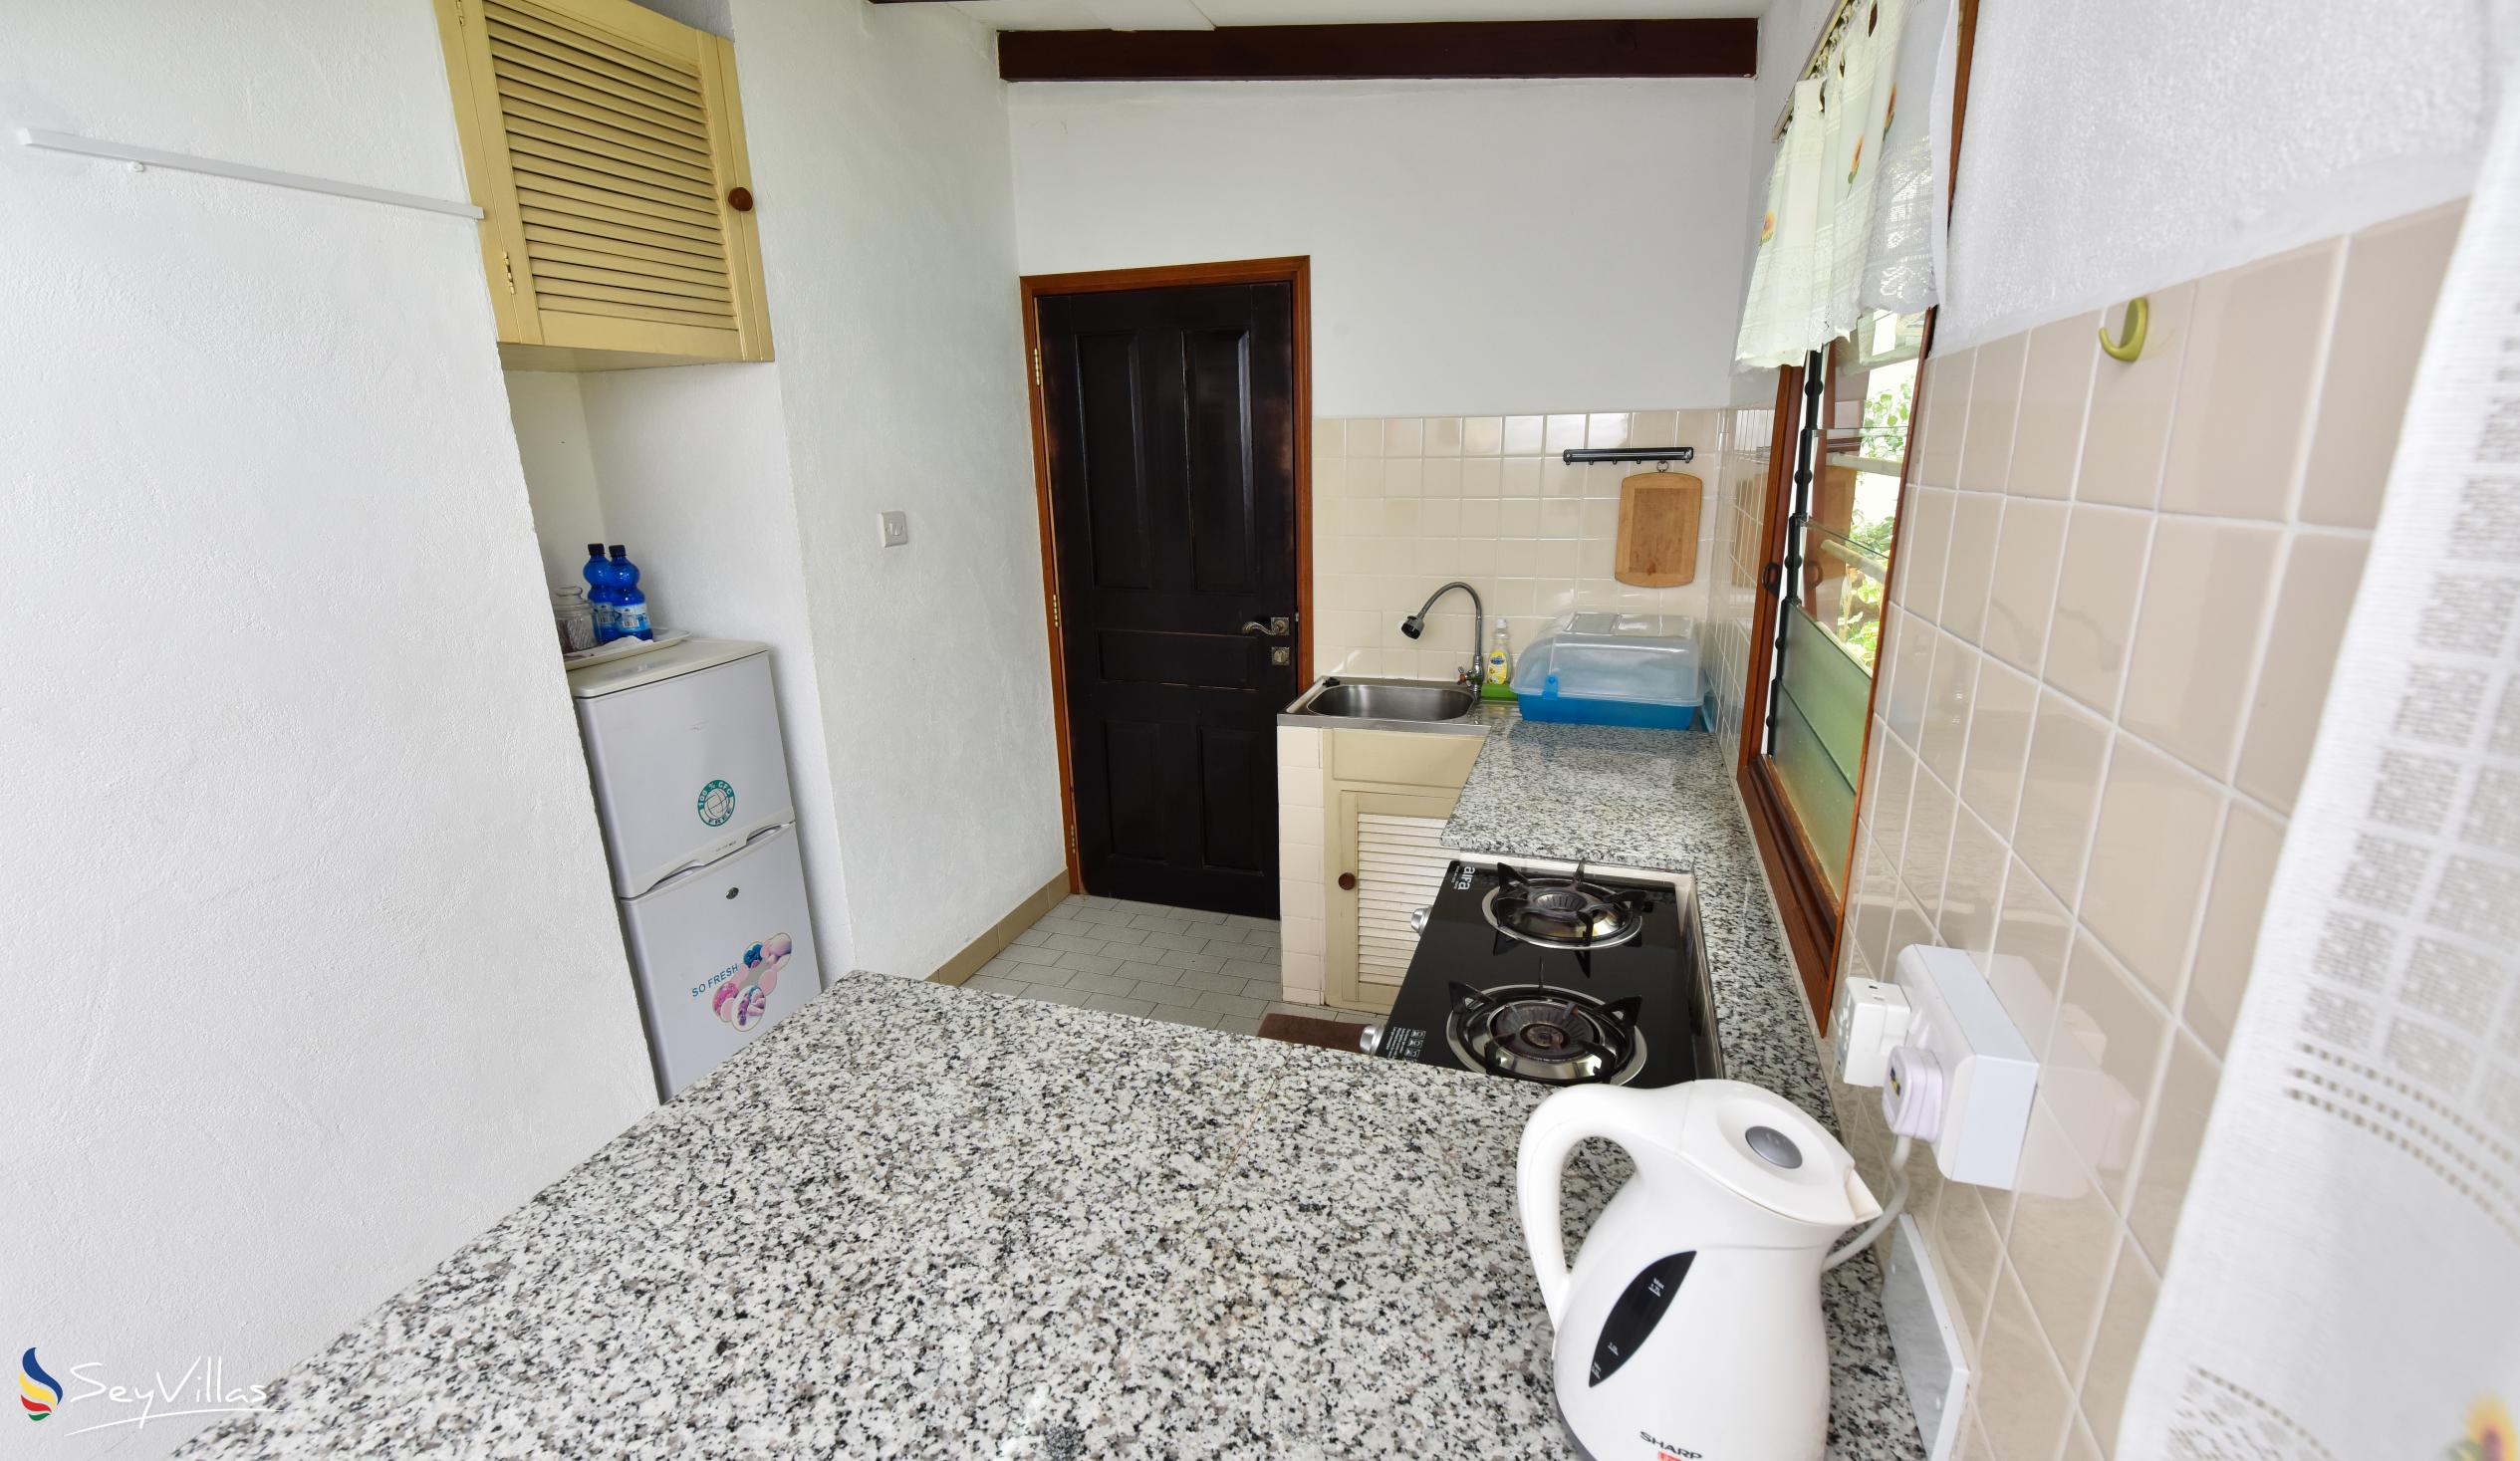 Foto 16: Anse Norwa Self Catering - Appartement im Erdgeschoss (Bonito) - Mahé (Seychellen)